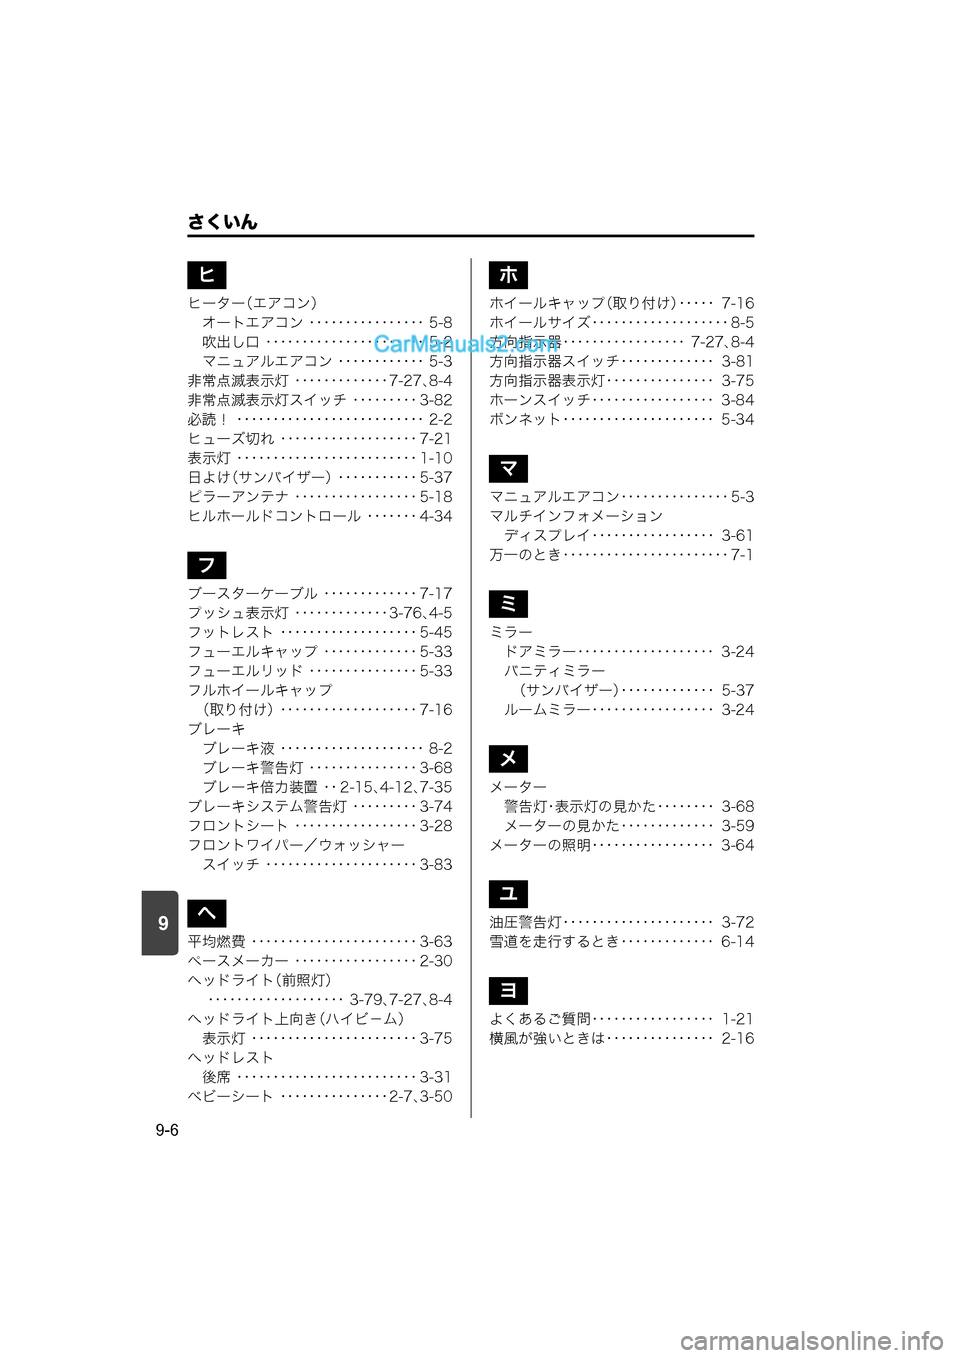 MAZDA MODEL CARROL 2015  取扱説明書 (キャロル) (in Japanese) 9
さくいん
9-6
ヒーター（エアコン）オートエアコン ････････････････ 5-8
吹出し口 ･････････････････････